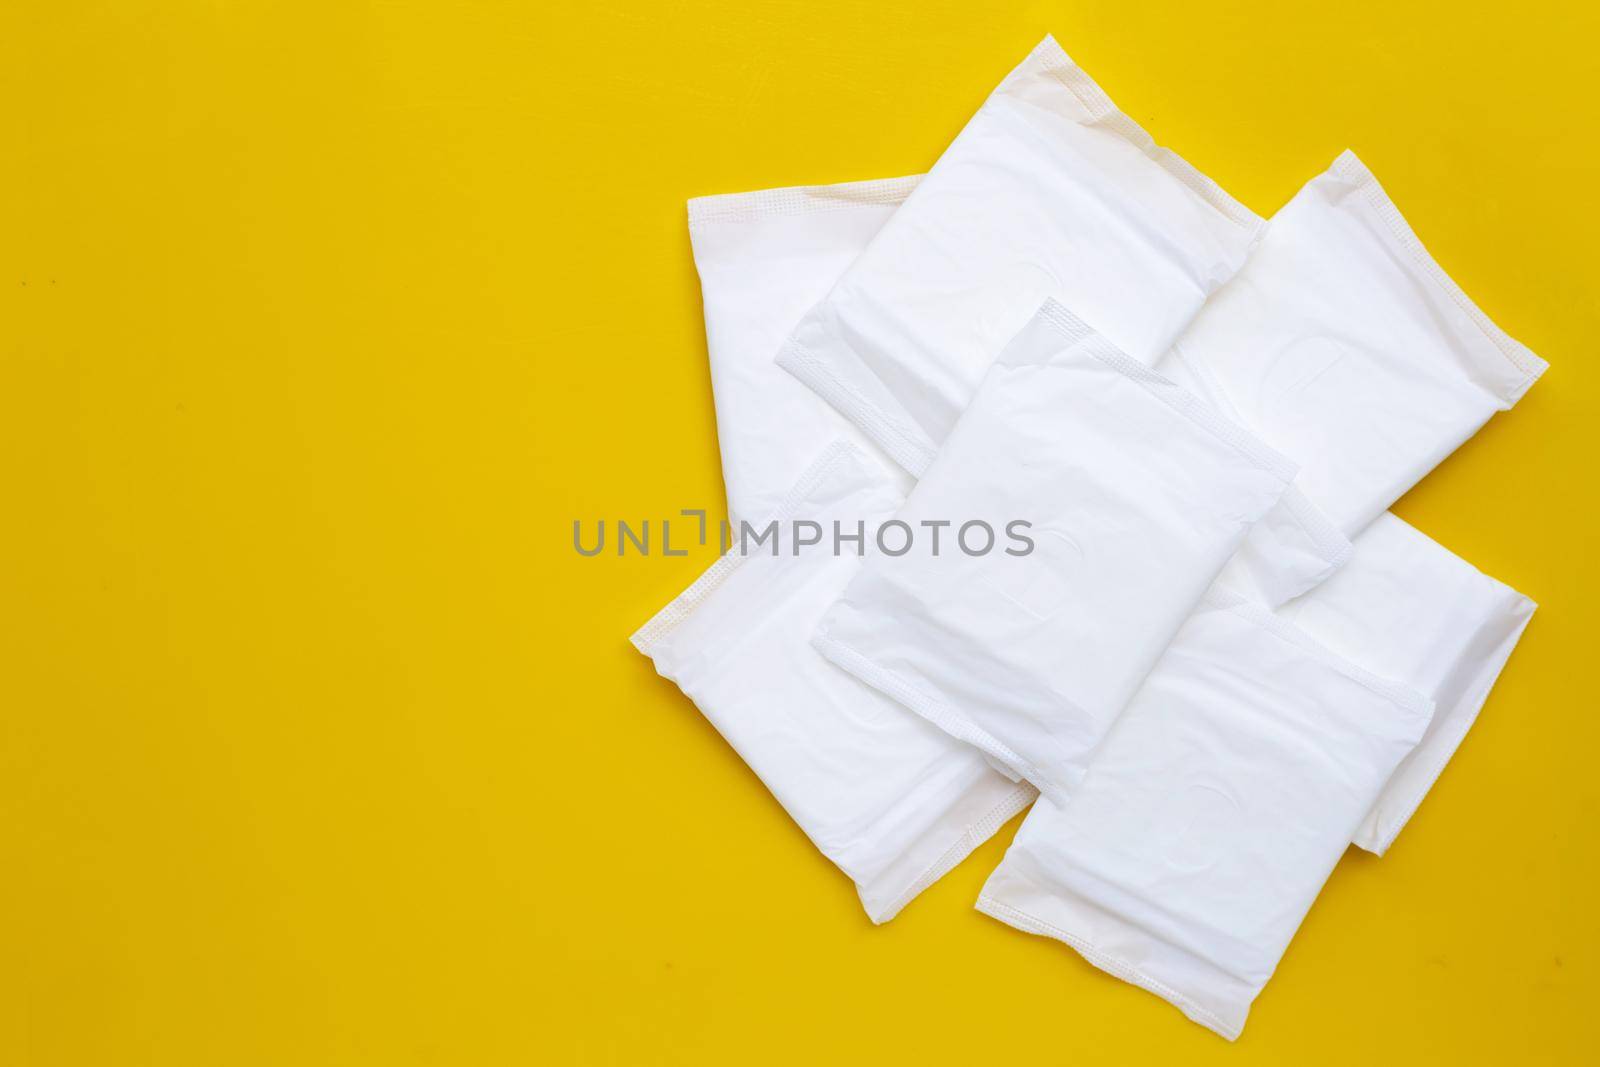 White sanitary pads on yellow background.